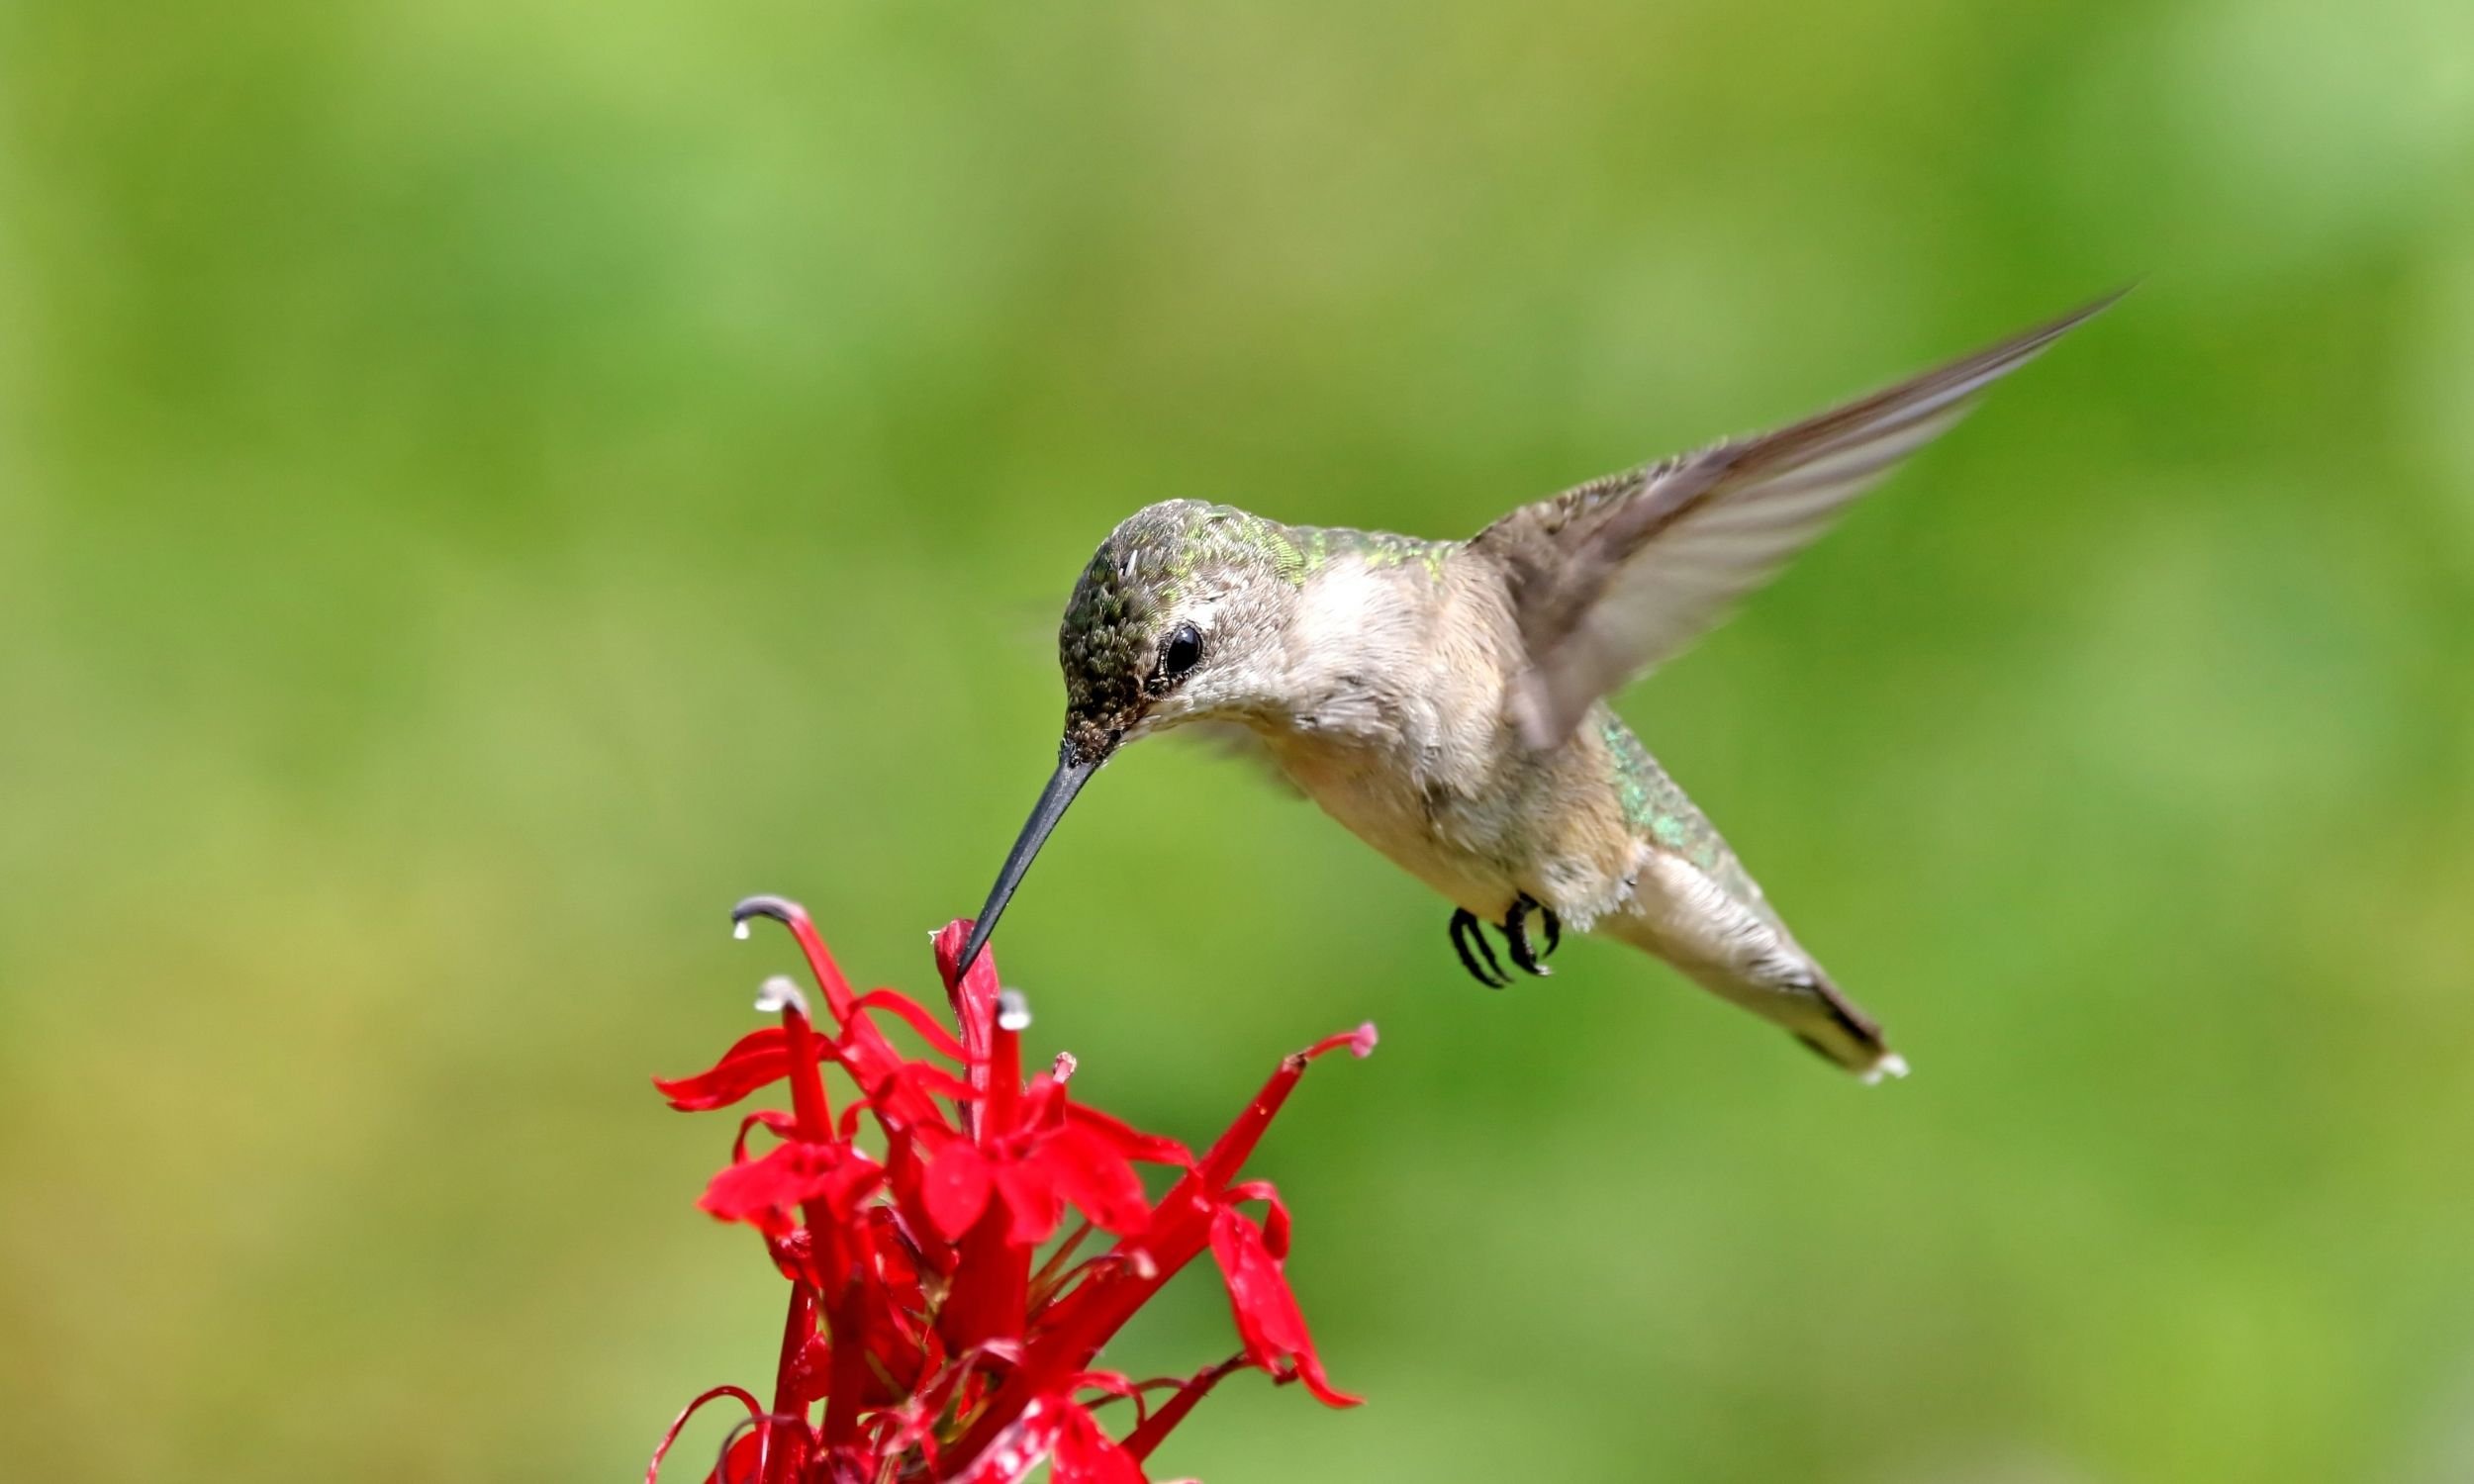 hummingbird drinking nectar